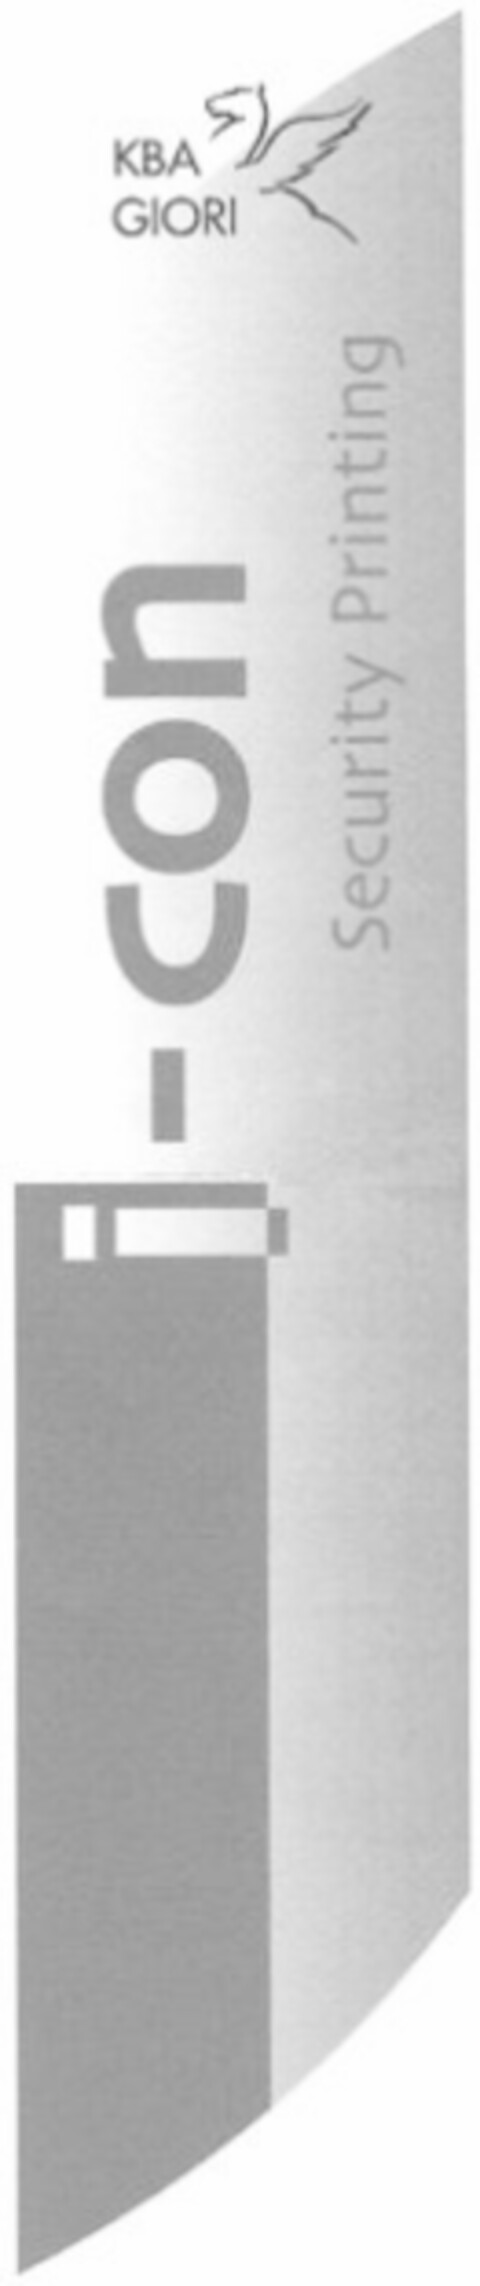 KBA GIORI i-con Security Printing Logo (IGE, 01.07.2005)